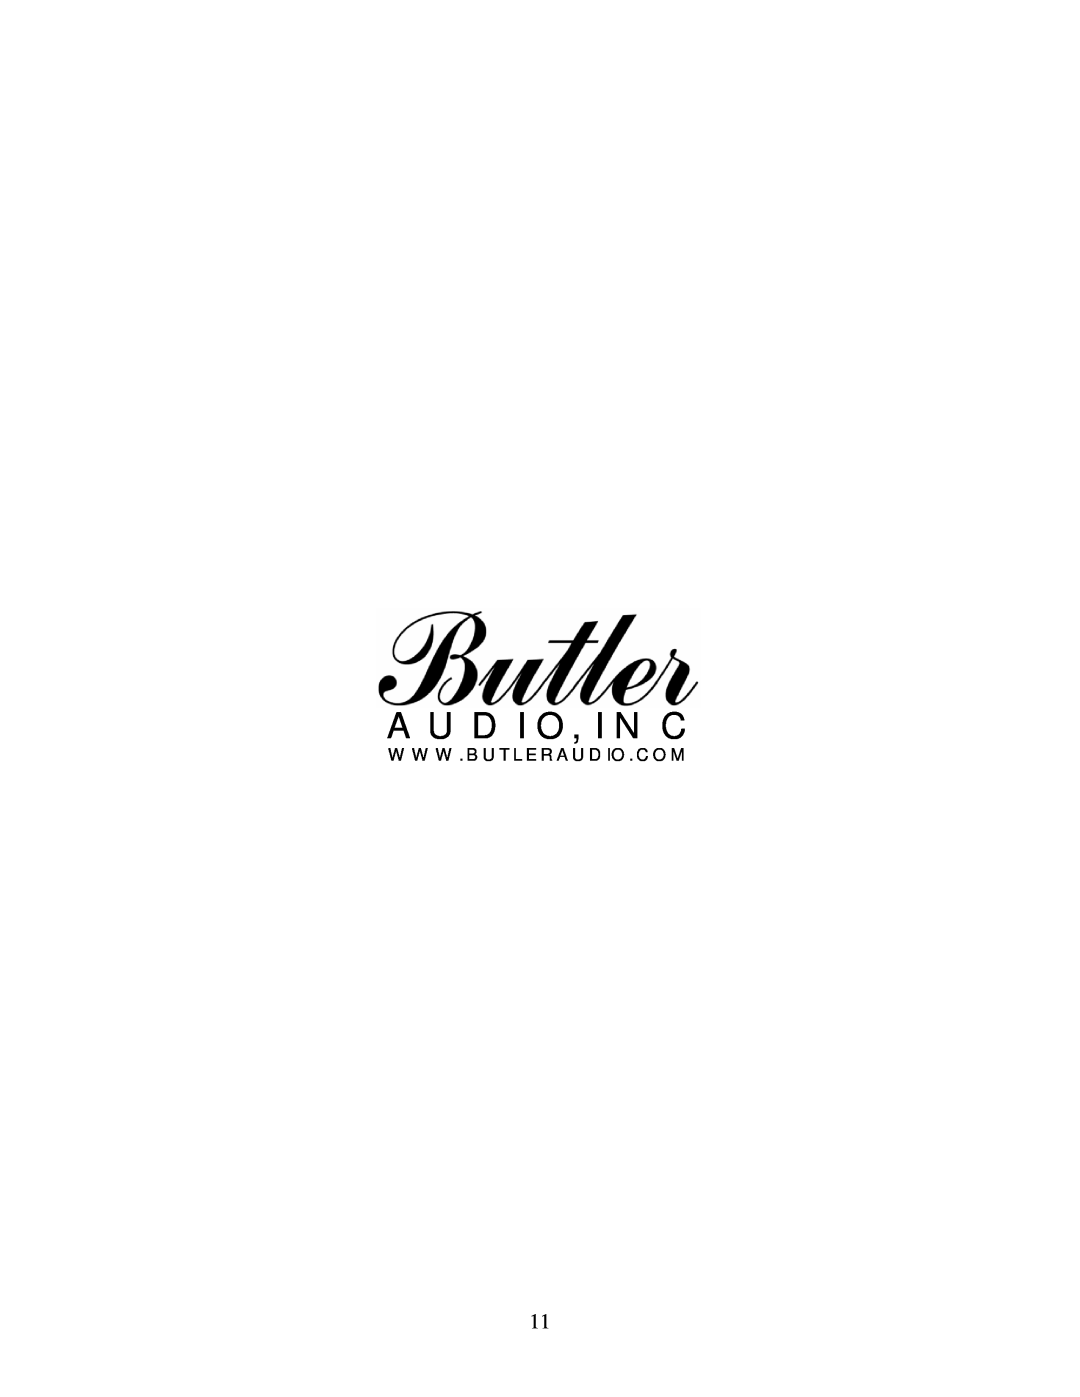 Butler Audio TDB 3150 manual A U D I O, I N C 